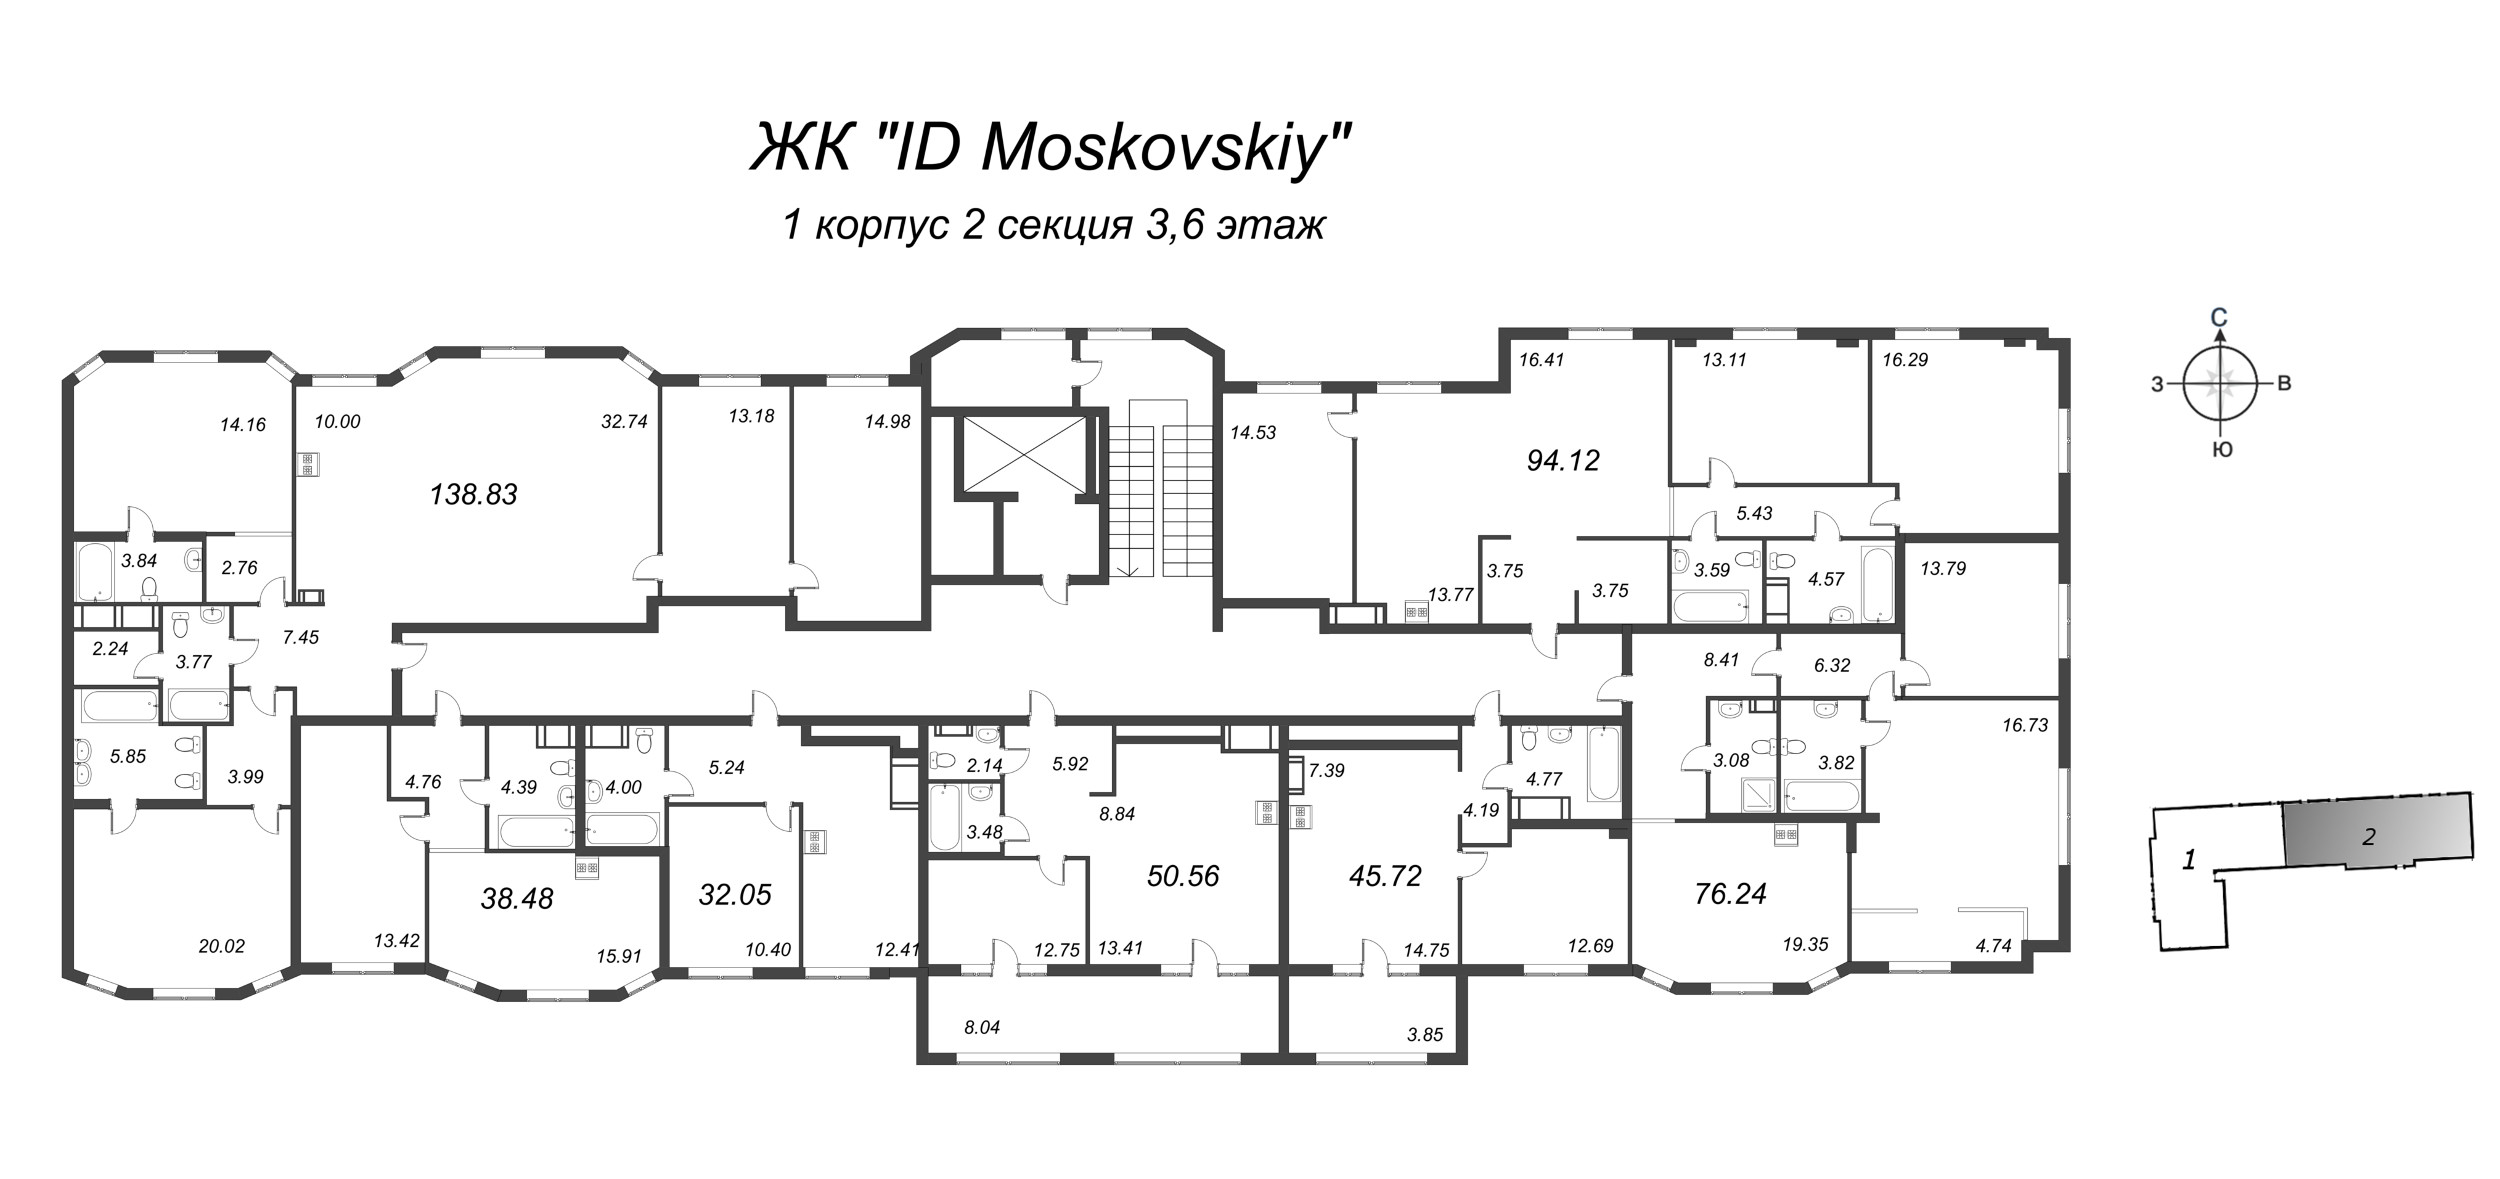 4-комнатная (Евро) квартира, 94.12 м² - планировка этажа